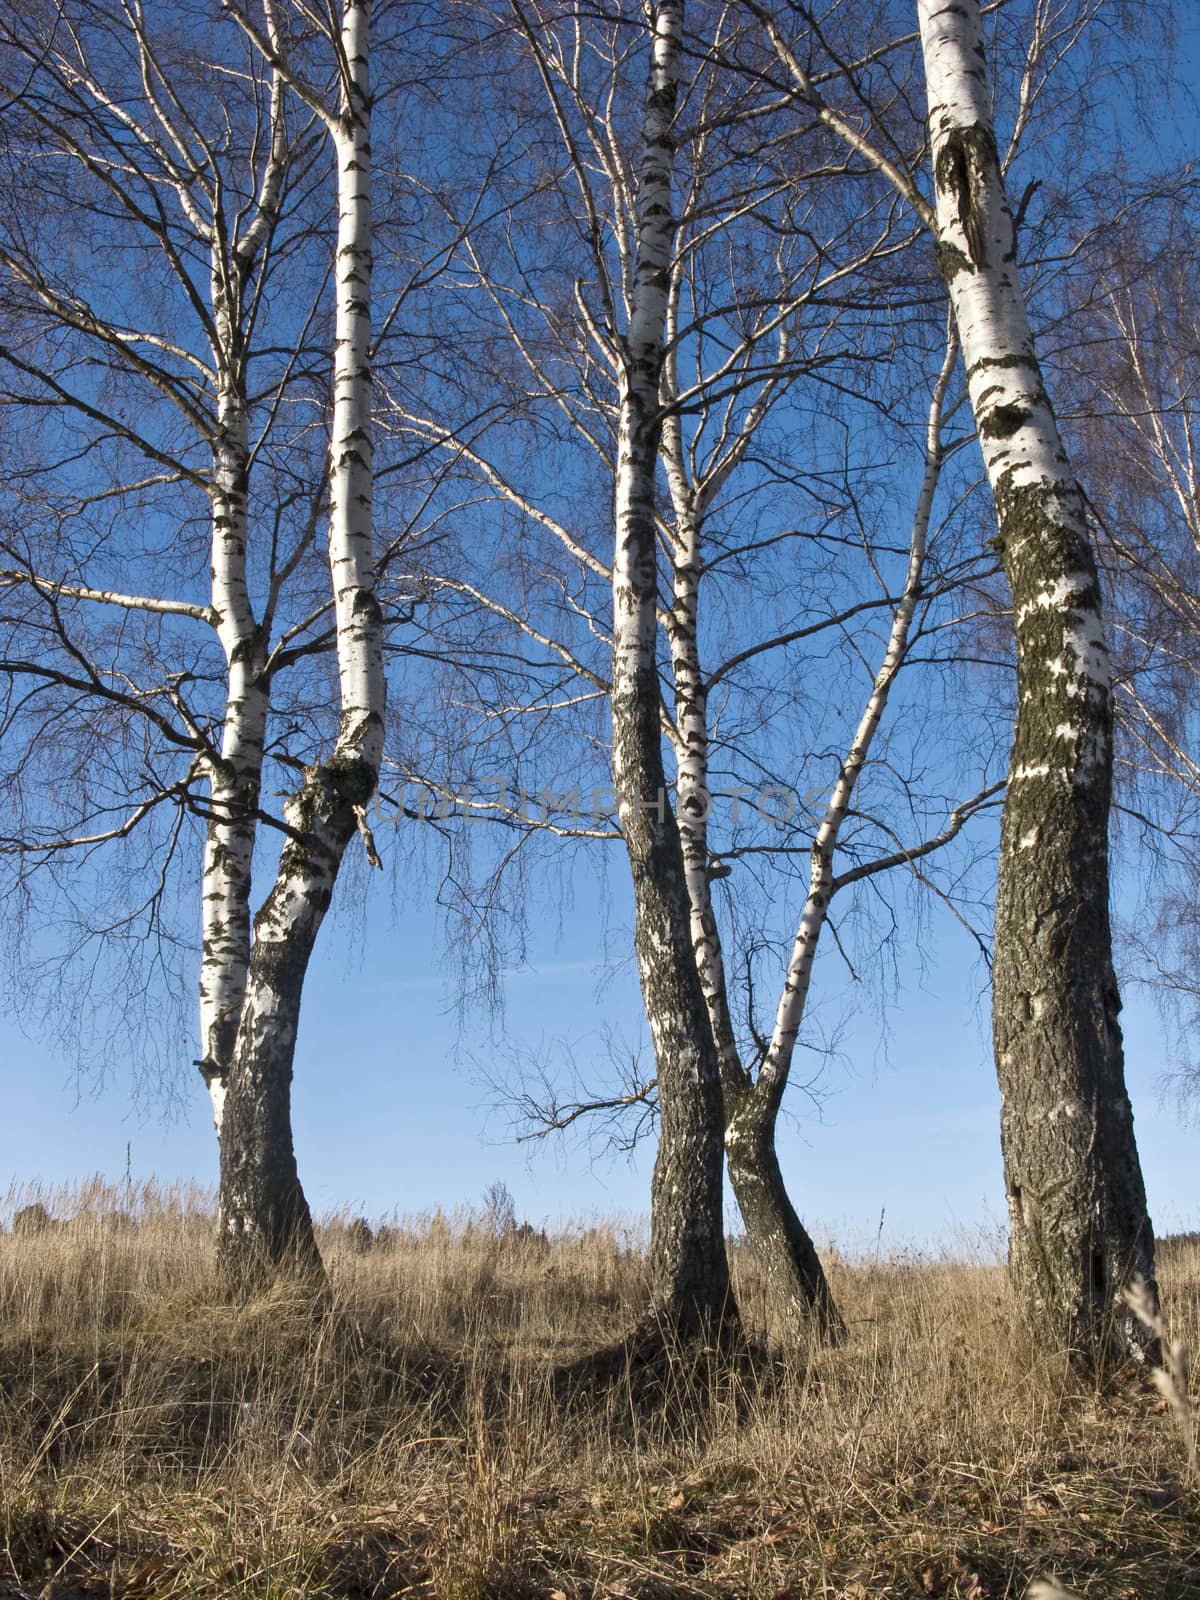 Birches in winter forest by wander